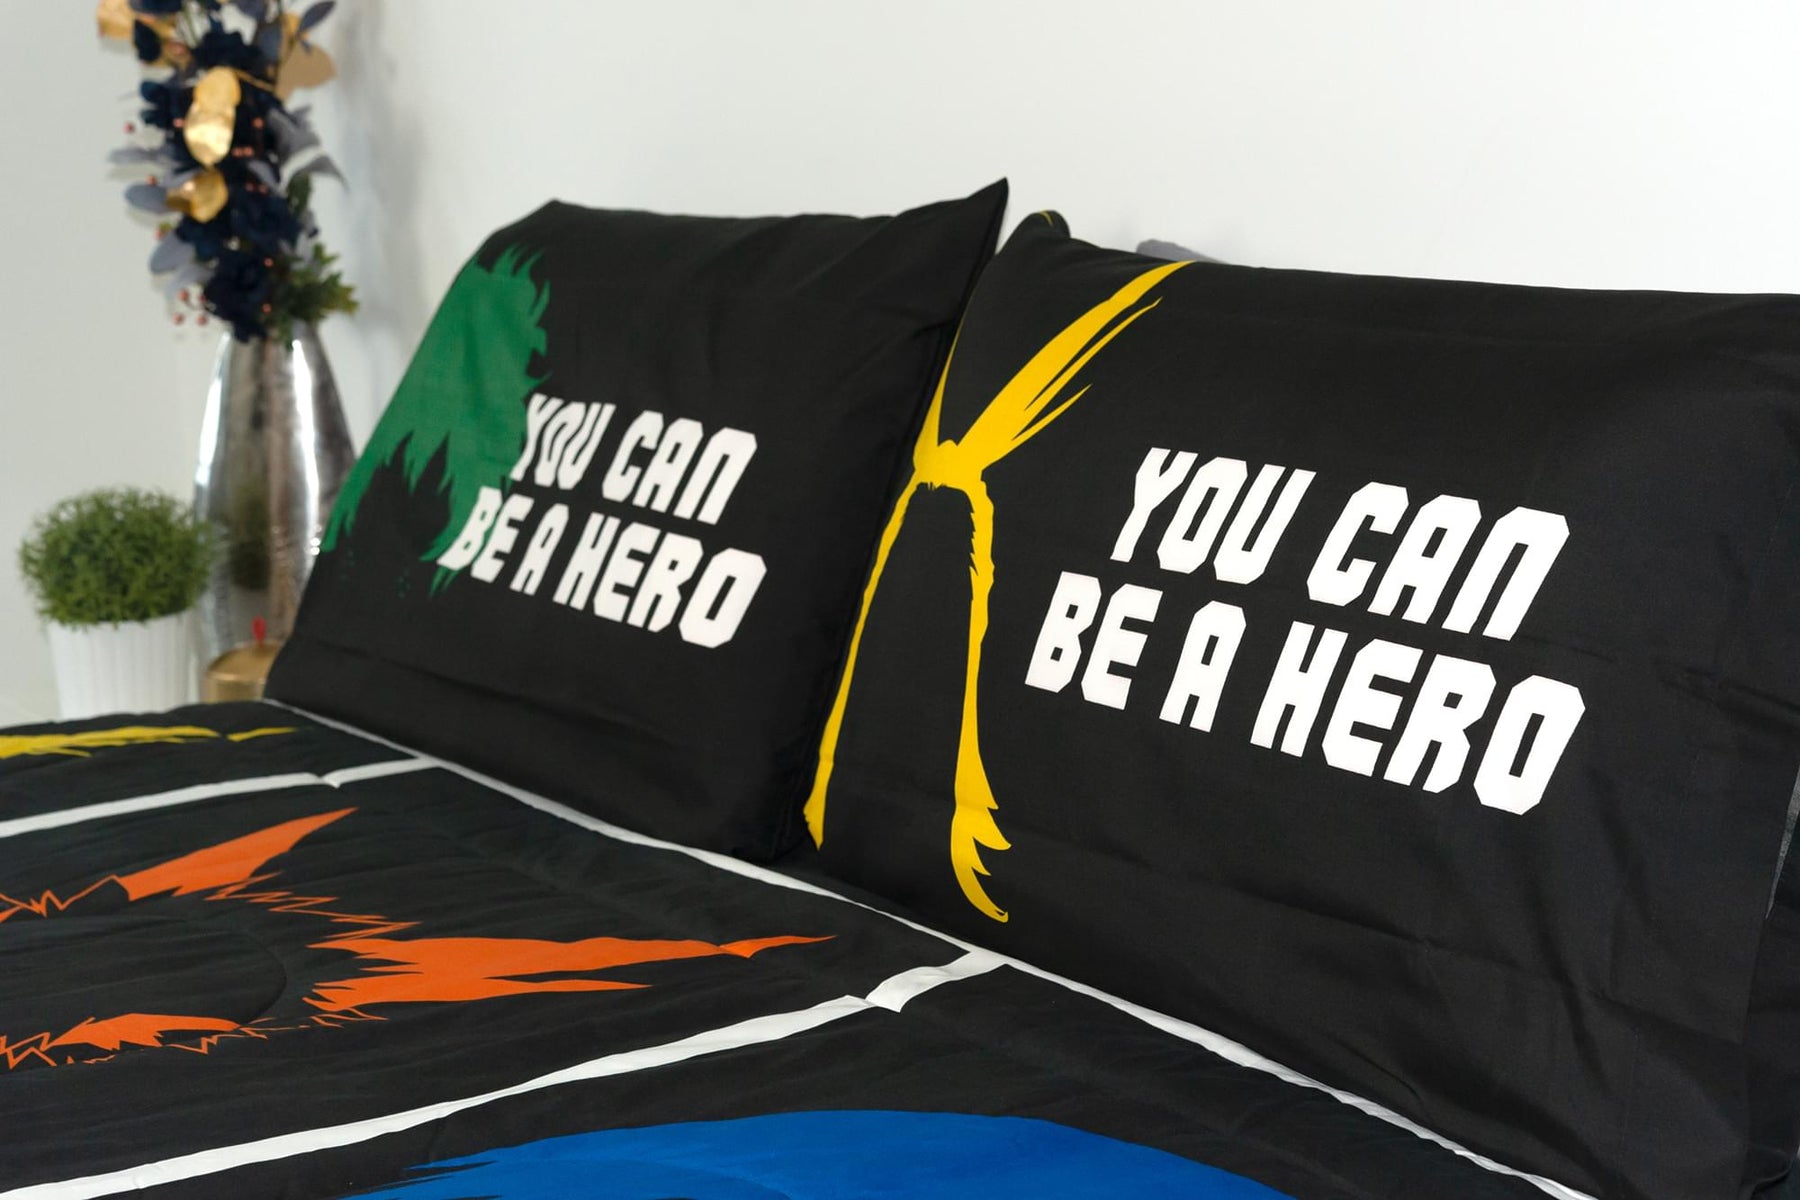 My Hero Academia All Might & Deku Pillowcase Set | 30 x 20 Inches | Set of 2